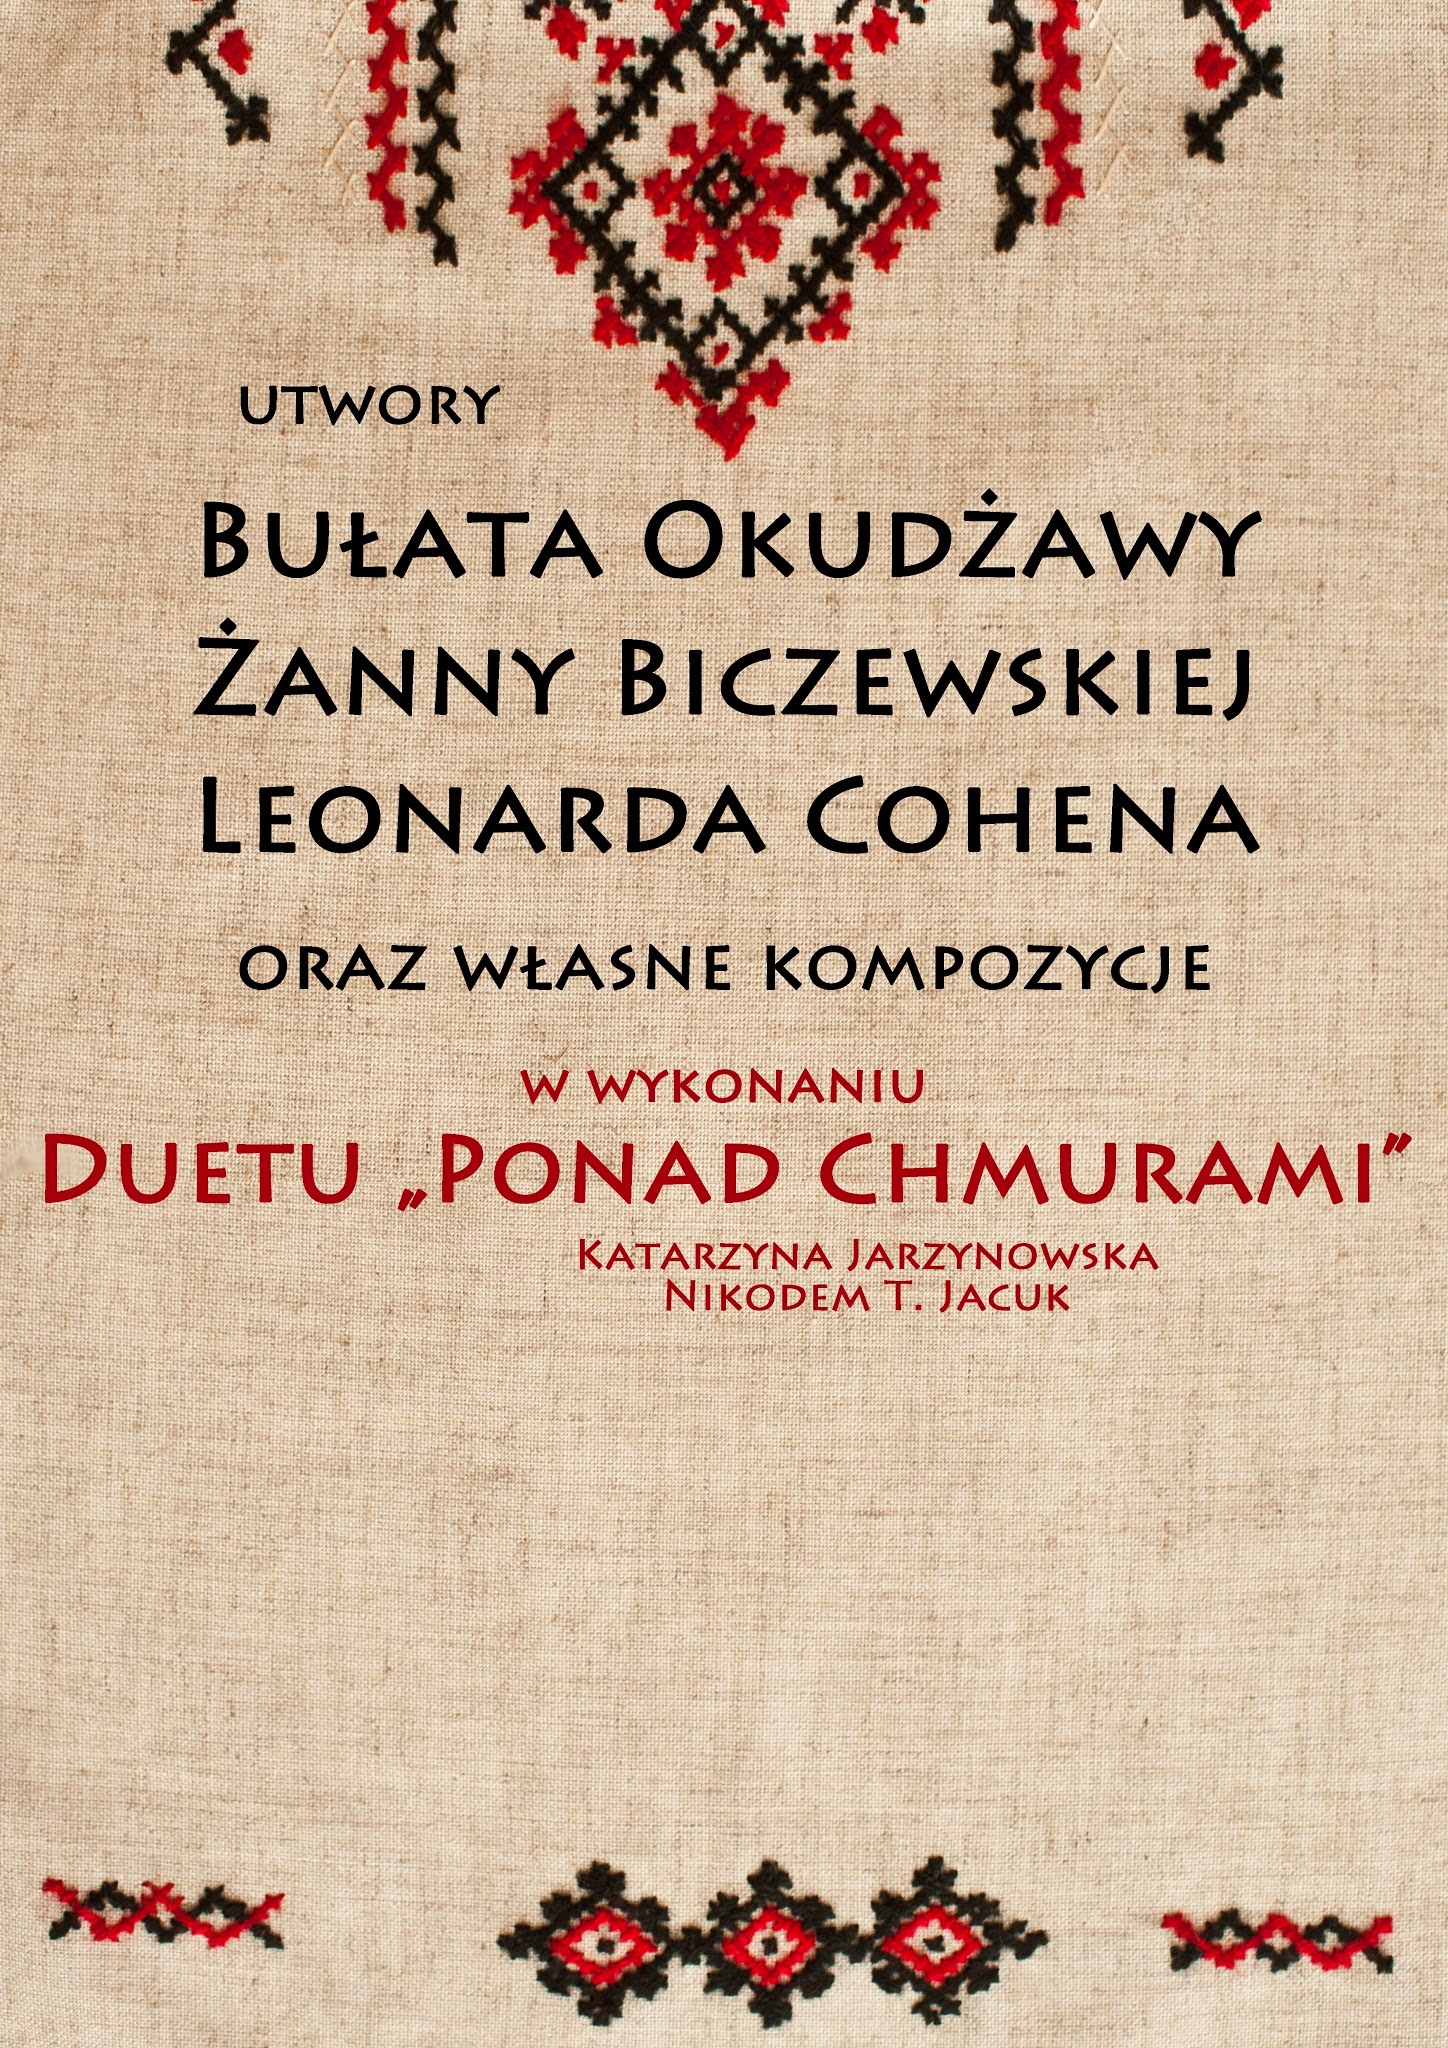 OSA: Ponad Chmurami - Okudżawa, Biczewska, Cohen [koncert]